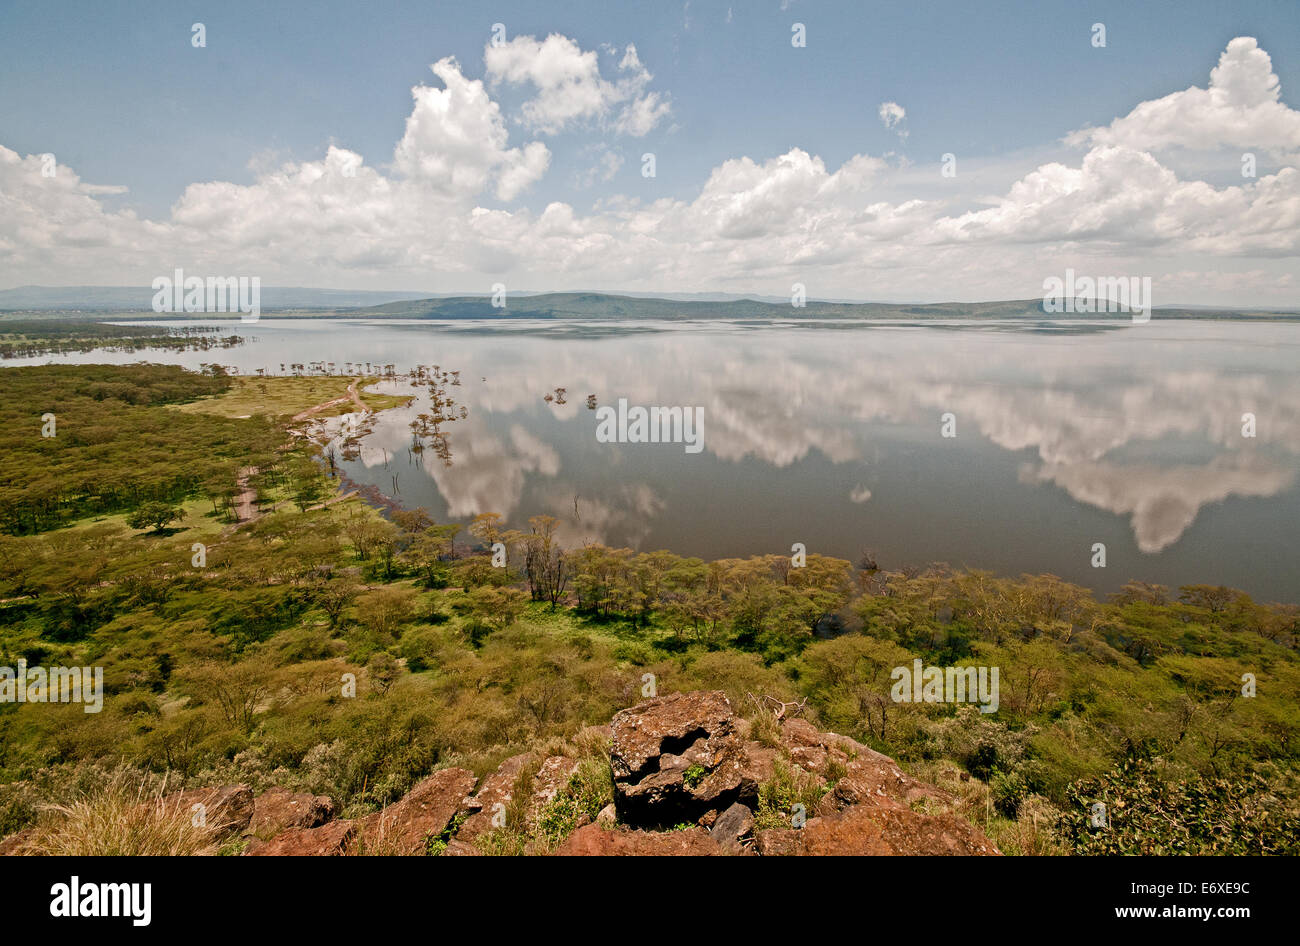 Vista panorámica de alto nivel inundadas del Lago Nakuru cumbre de Babuino acantilados del Parque Nacional lago Nakuru Kenia África Oriental PANORA Foto de stock